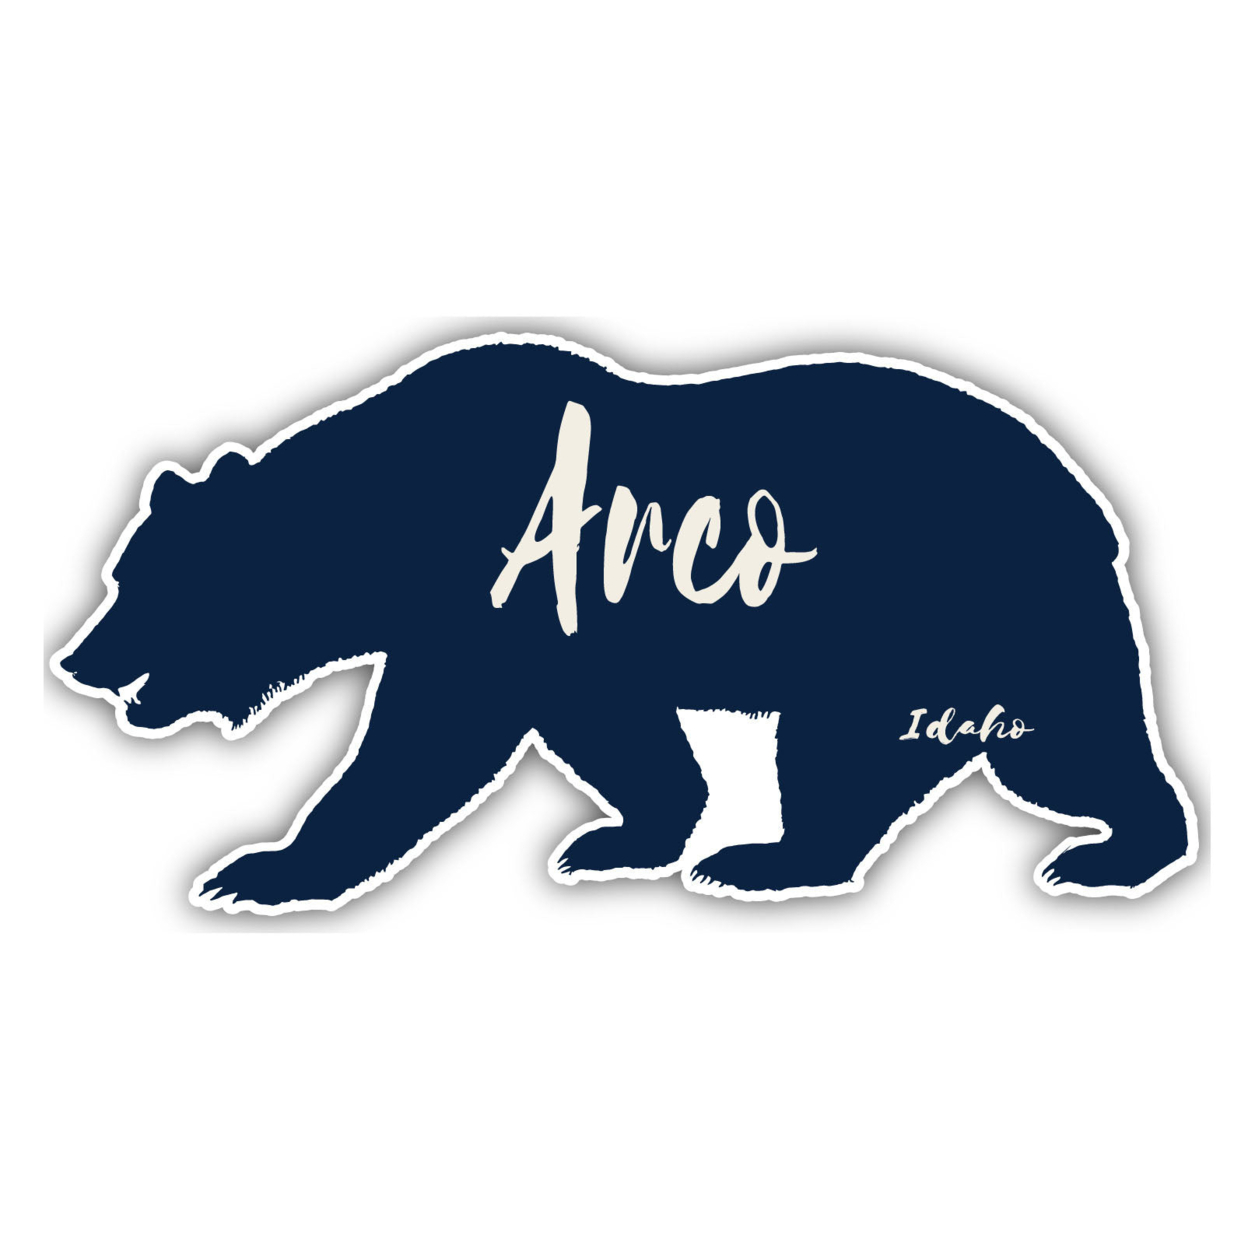 Arco Idaho Souvenir Decorative Stickers (Choose Theme And Size) - Single Unit, 10-Inch, Bear